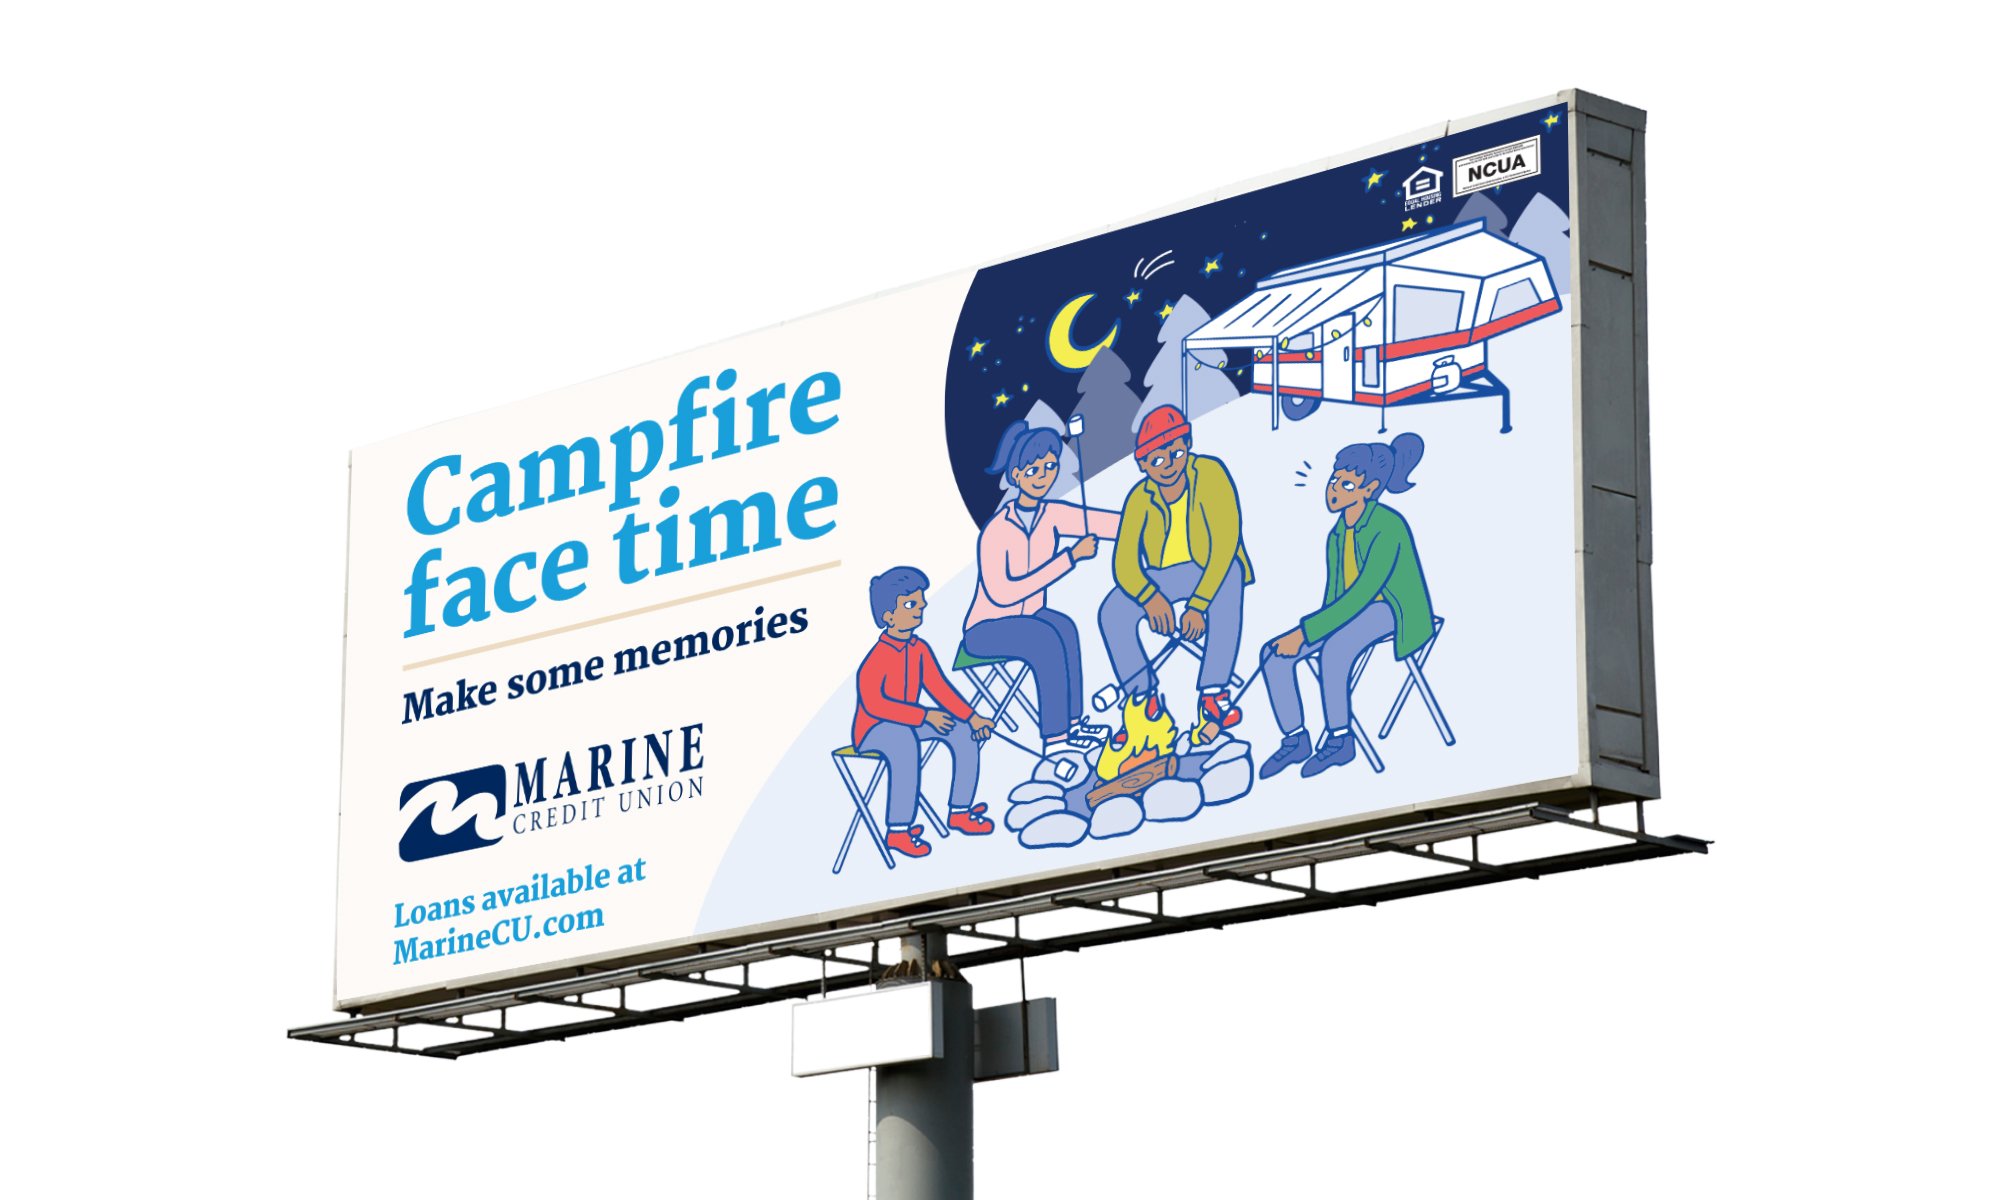 Marine Credit Union campfire face time billboard with original illustration of a family roasting marshmallows and marine c u dot com URL